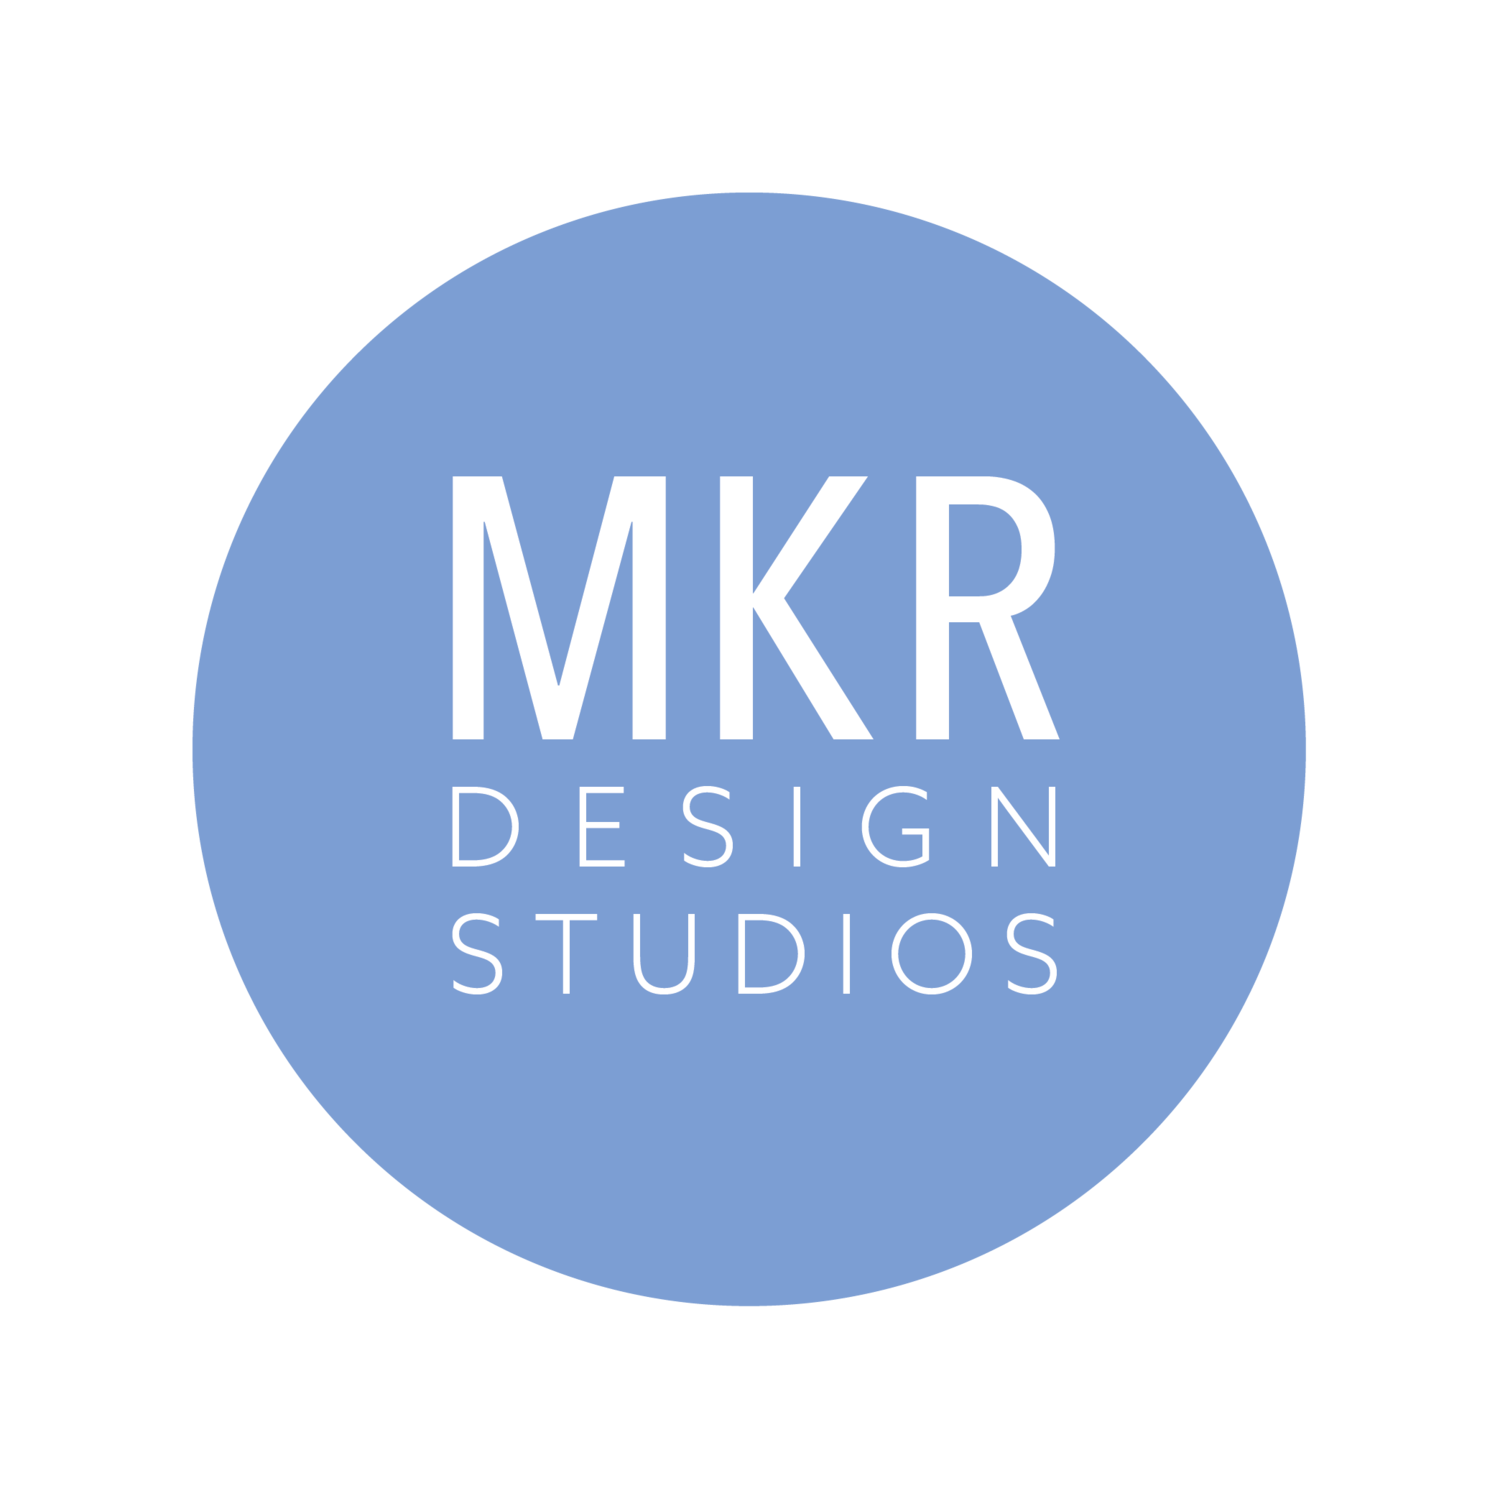 MKR Design Studios